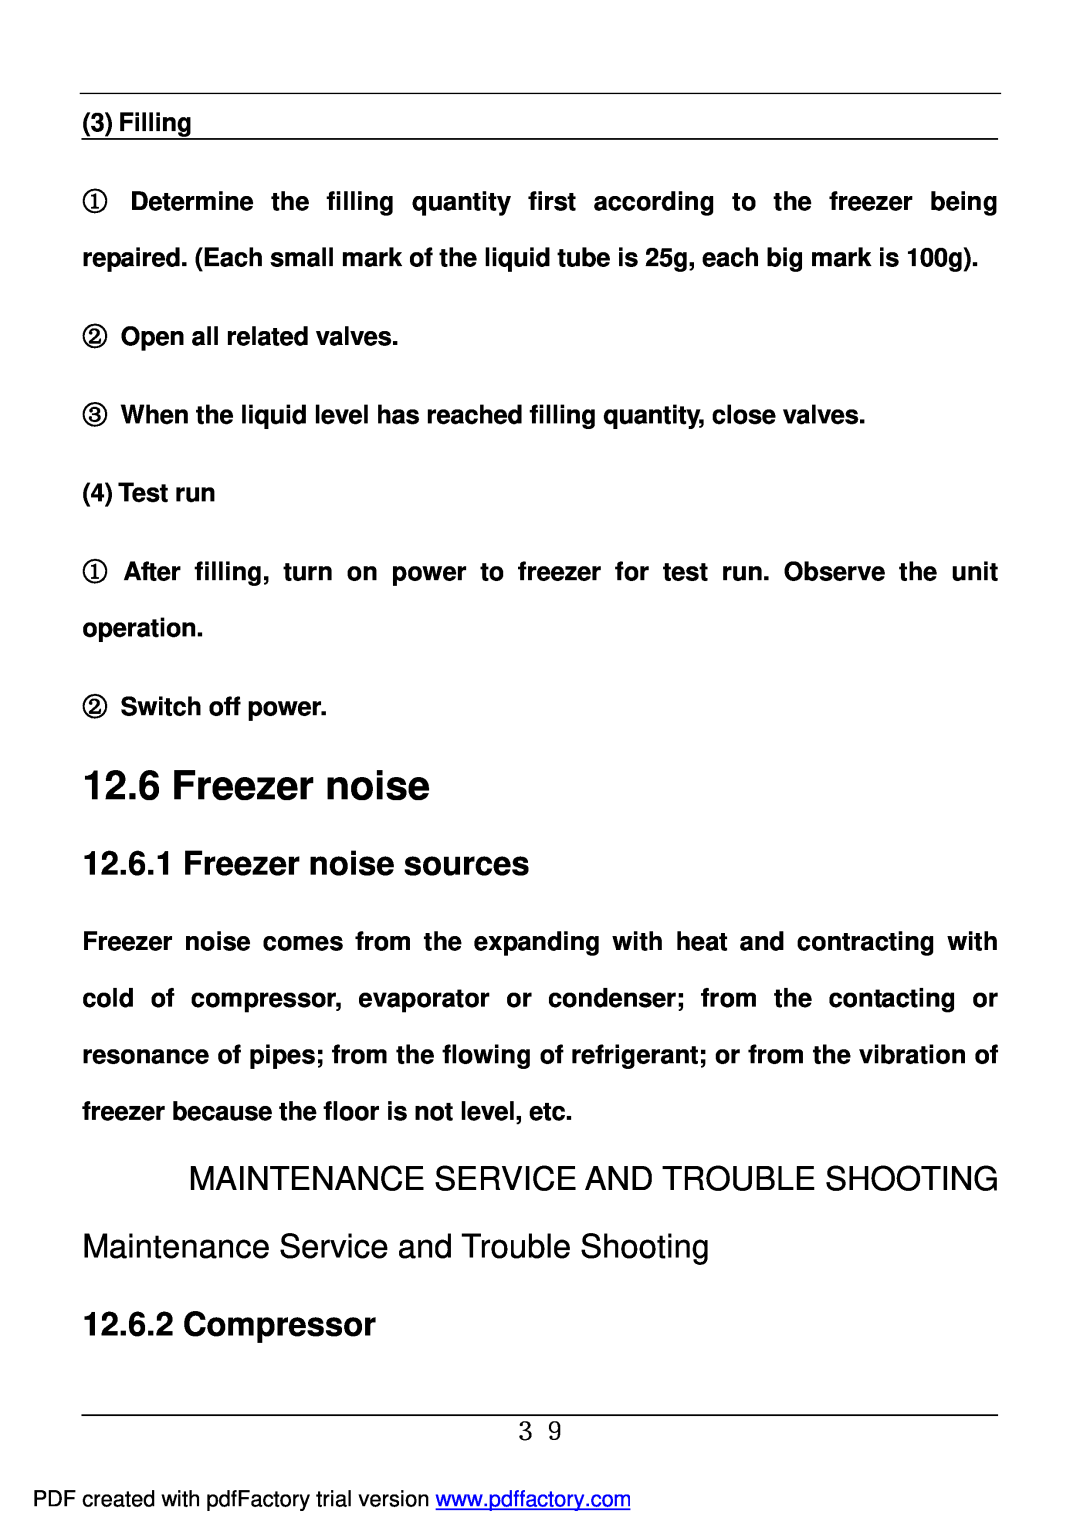 Haier BD-478A service manual Freezer noise sources, Compressor, Maintenance Service And Trouble Shooting 